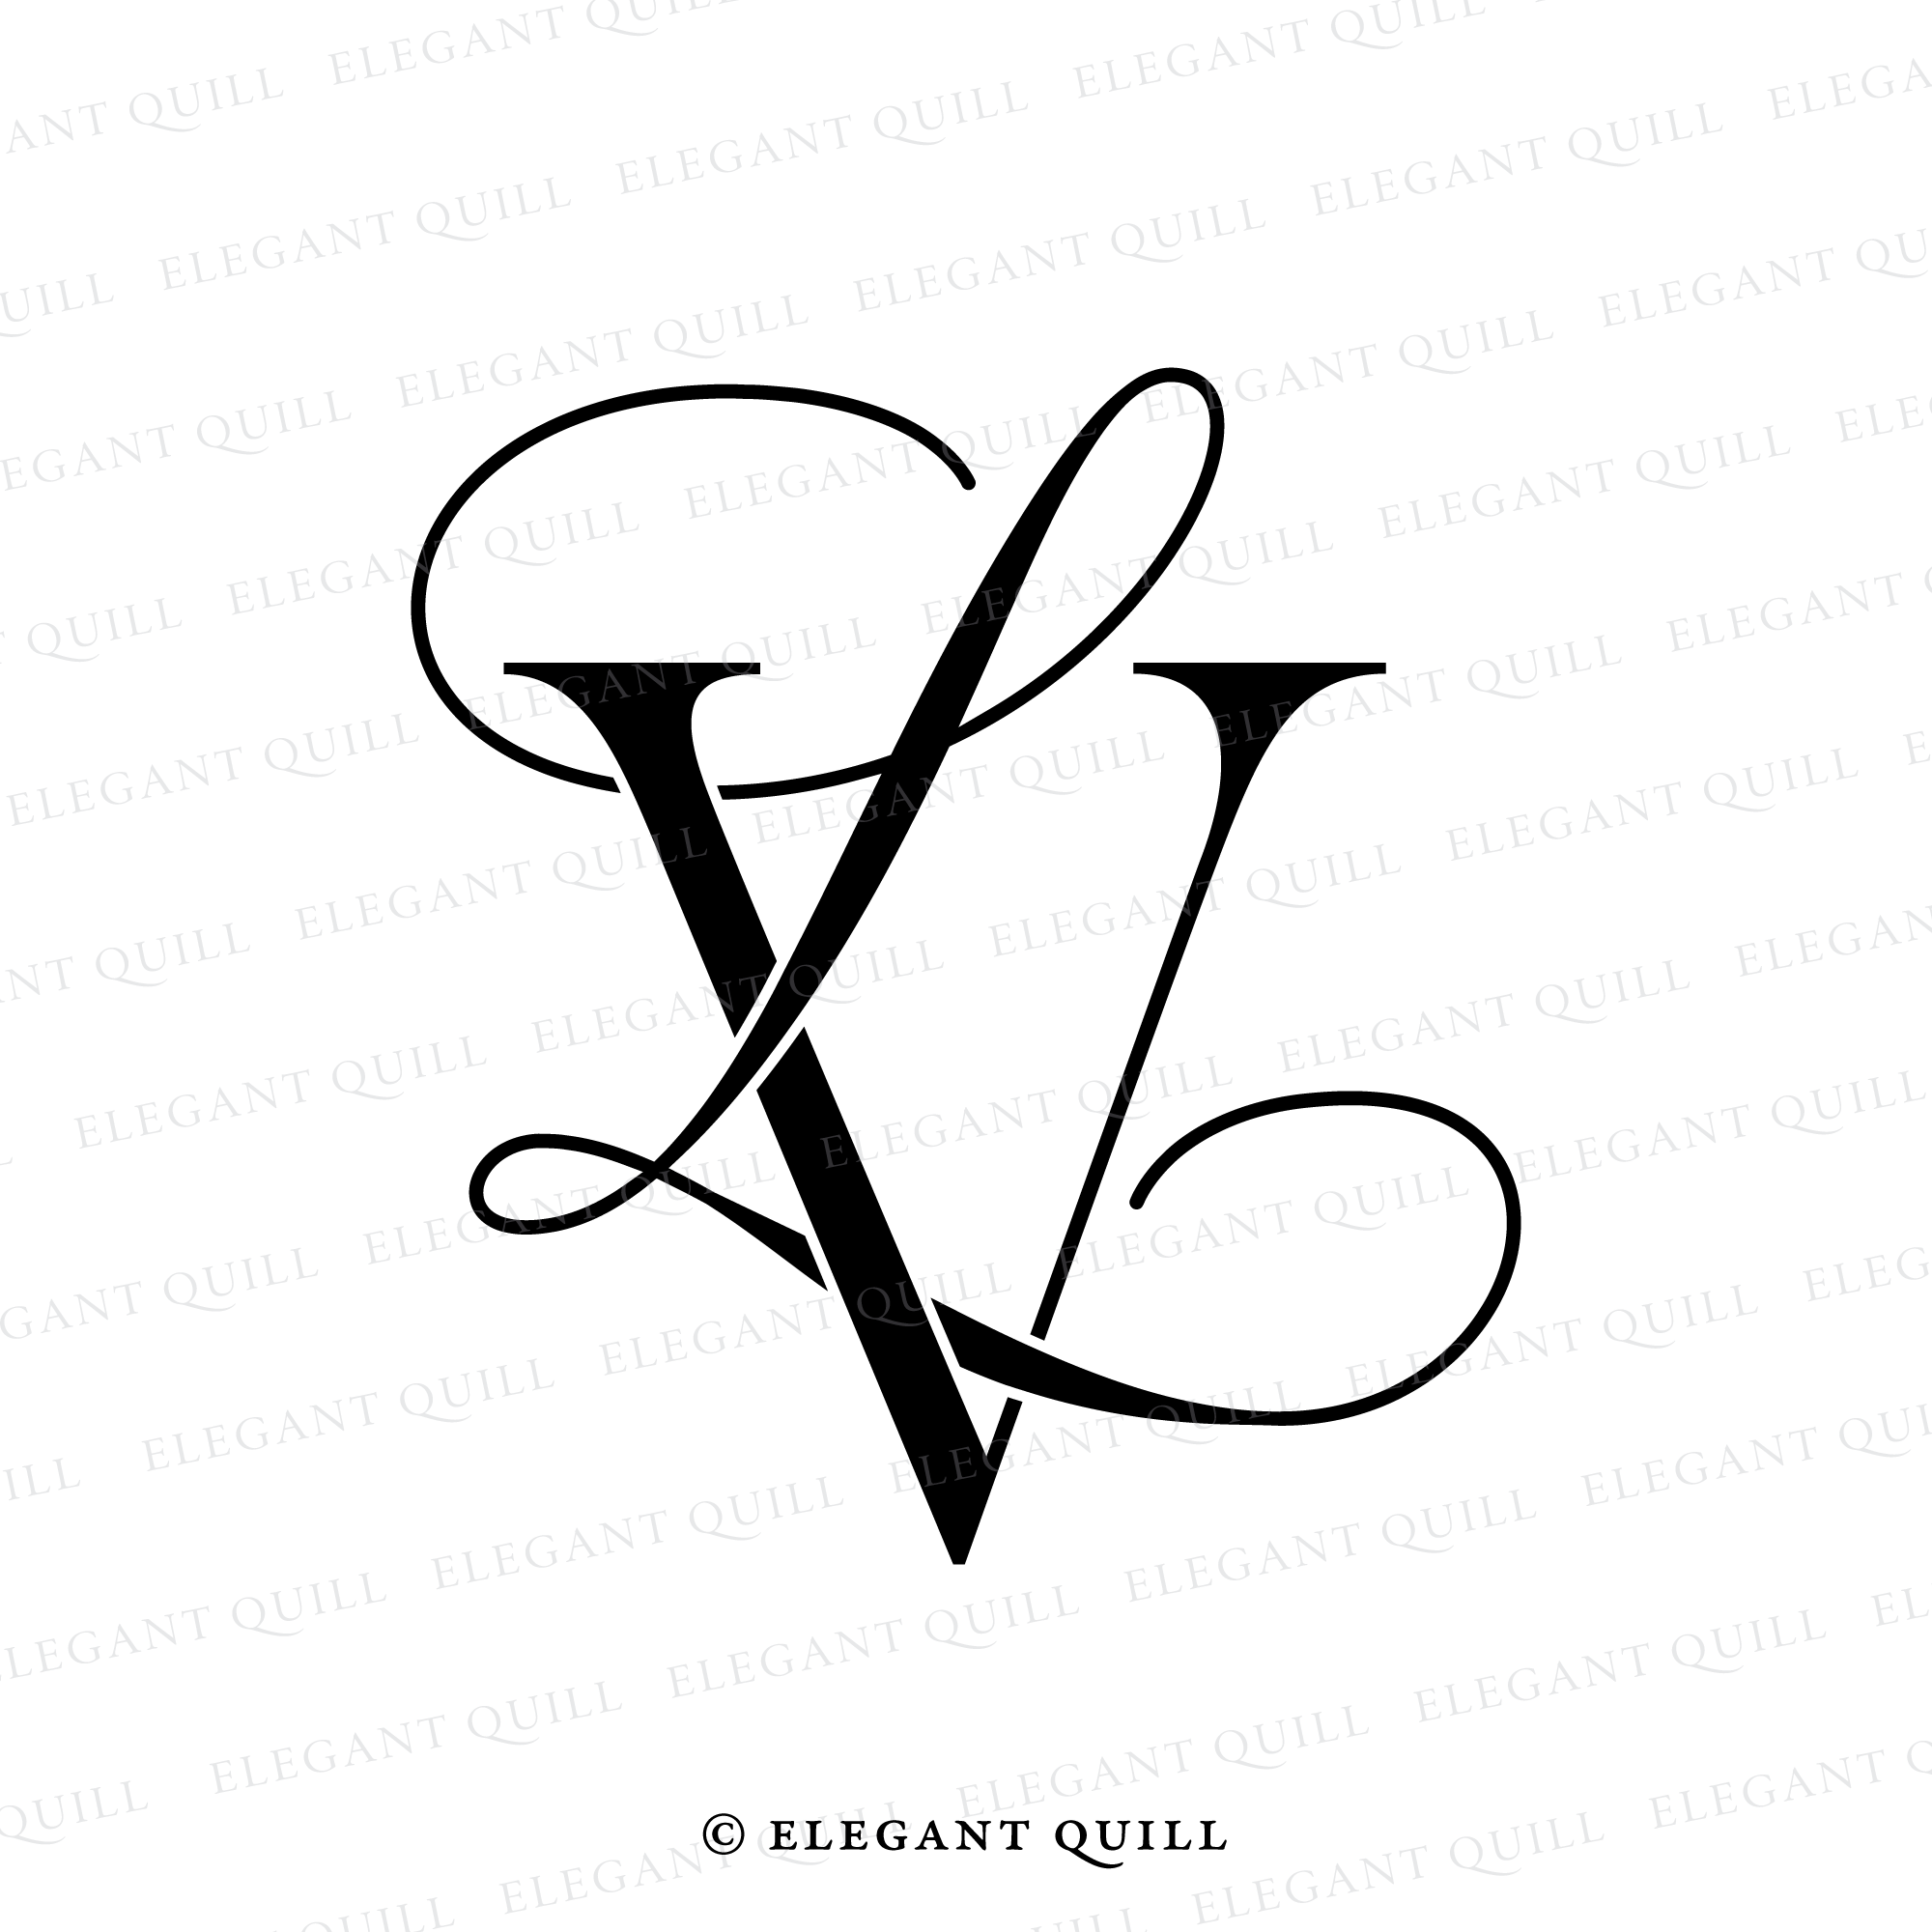 LV Logo VL logo